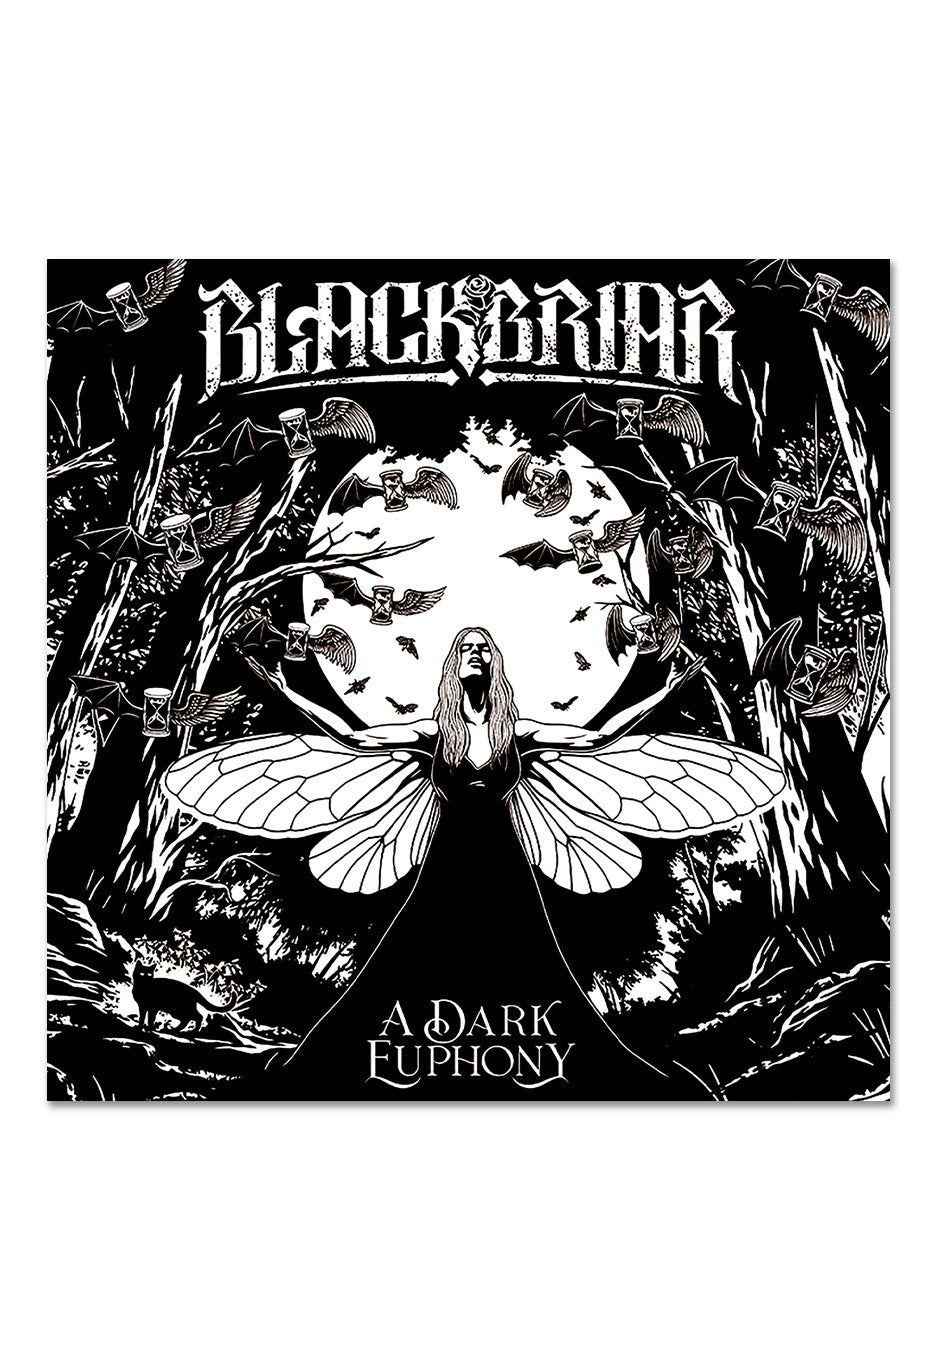 Blackbriar - A Dark Euphony Ltd. Transparent Red - Colored Vinyl